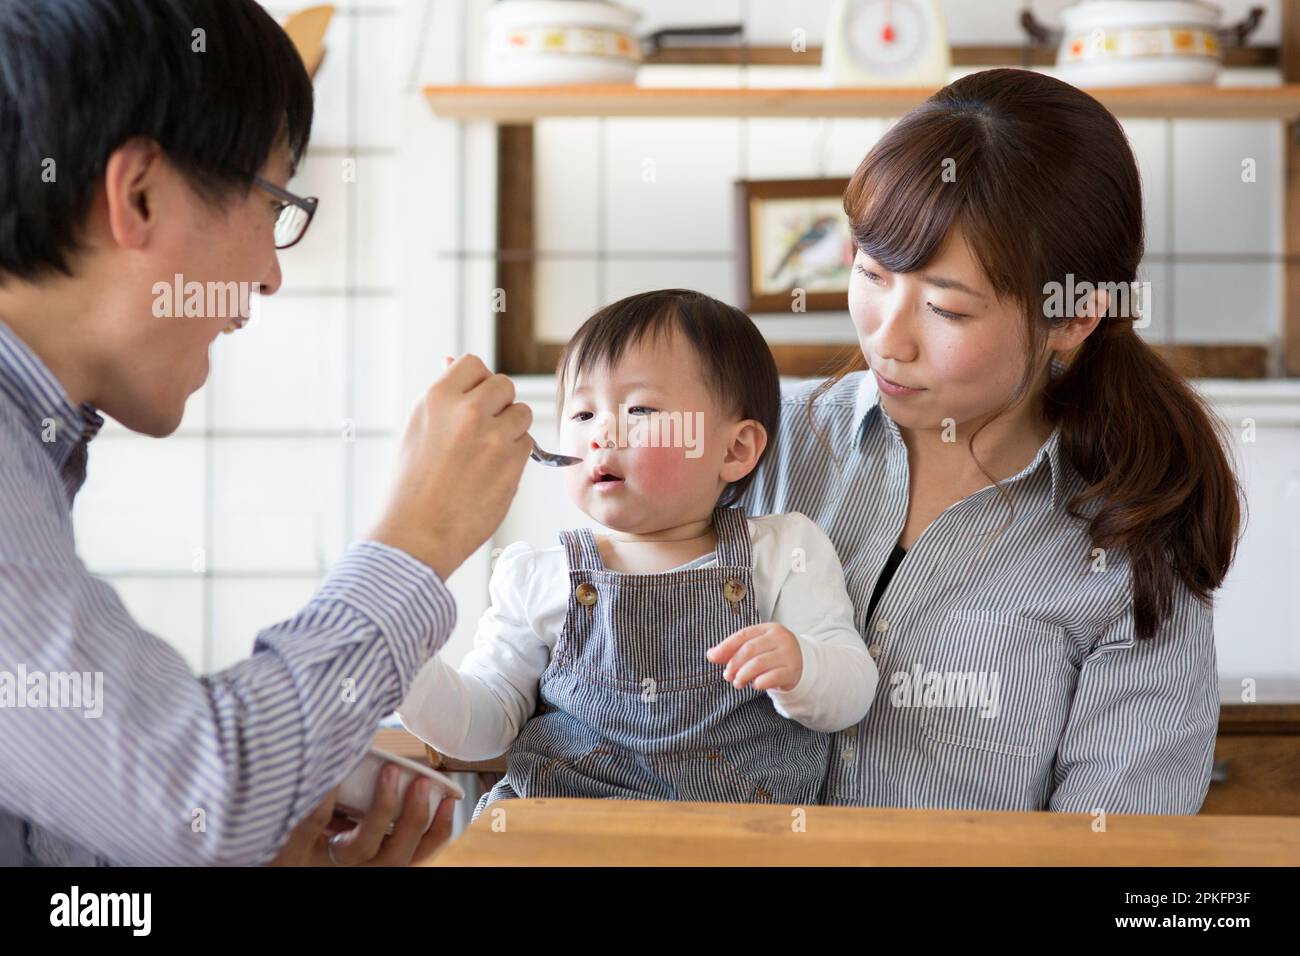 Parents feeding their children Stock Photo